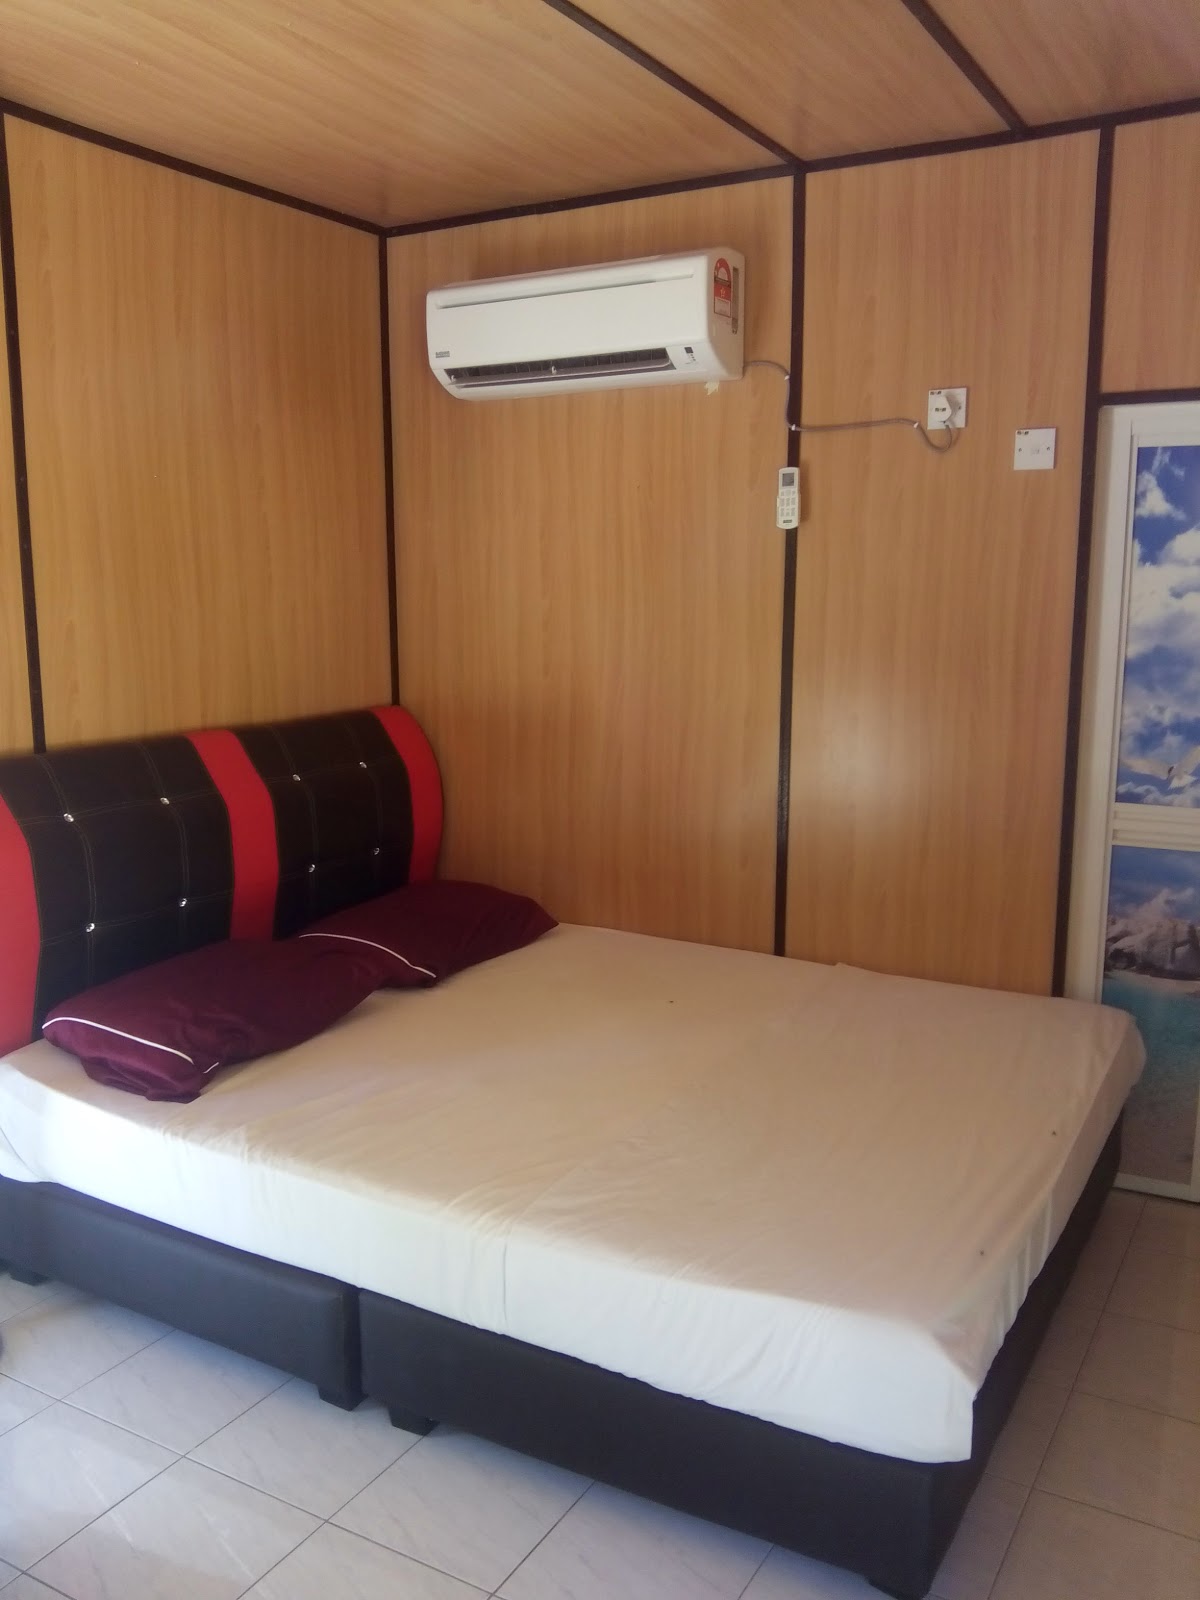 HOMESTAY TAIPING SERI Rehat, Rawat Dan Relax: Chalet Cabin 